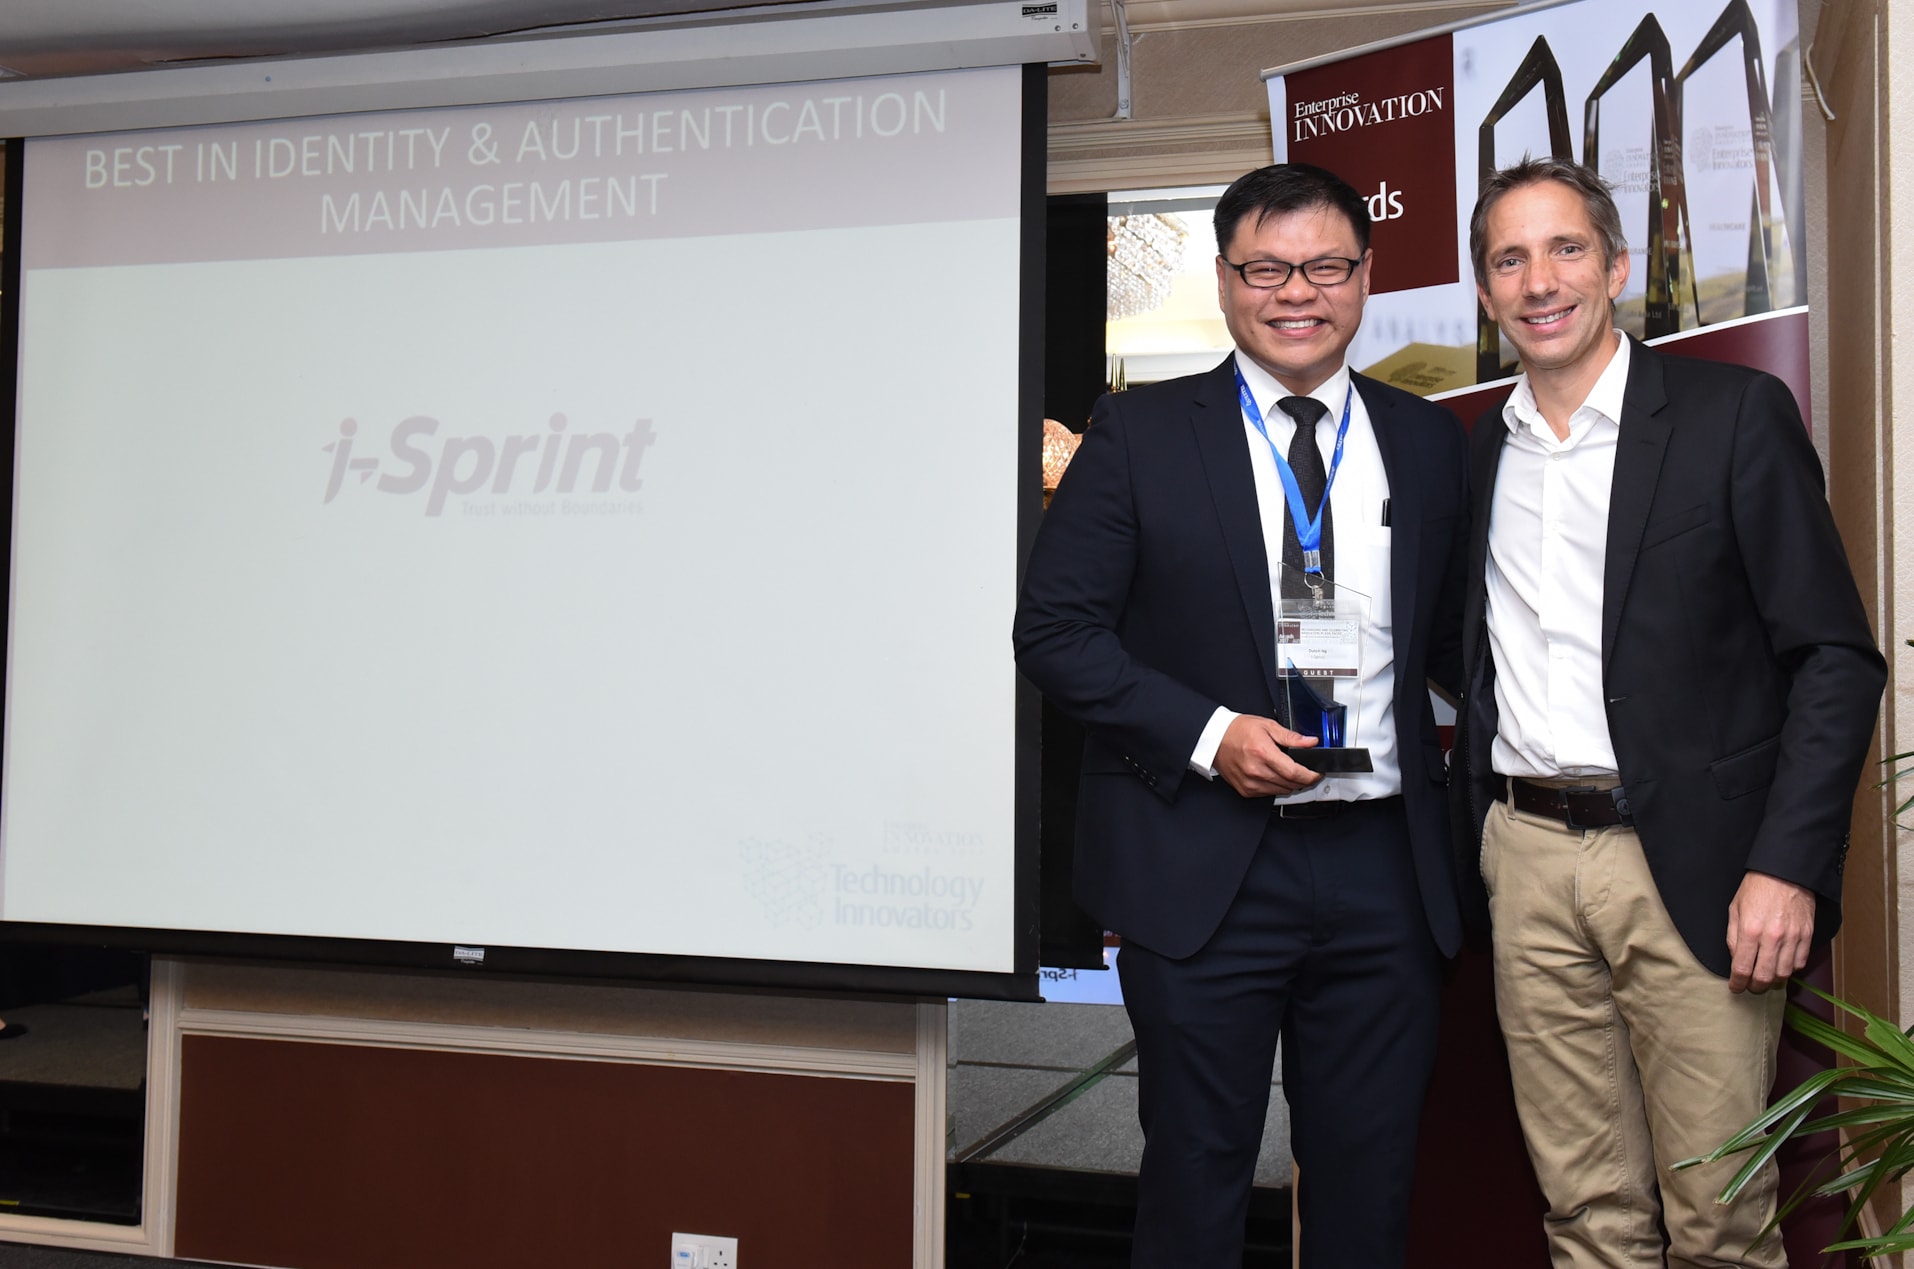 i-Sprint Won Enterprise Innovation Award 2017 